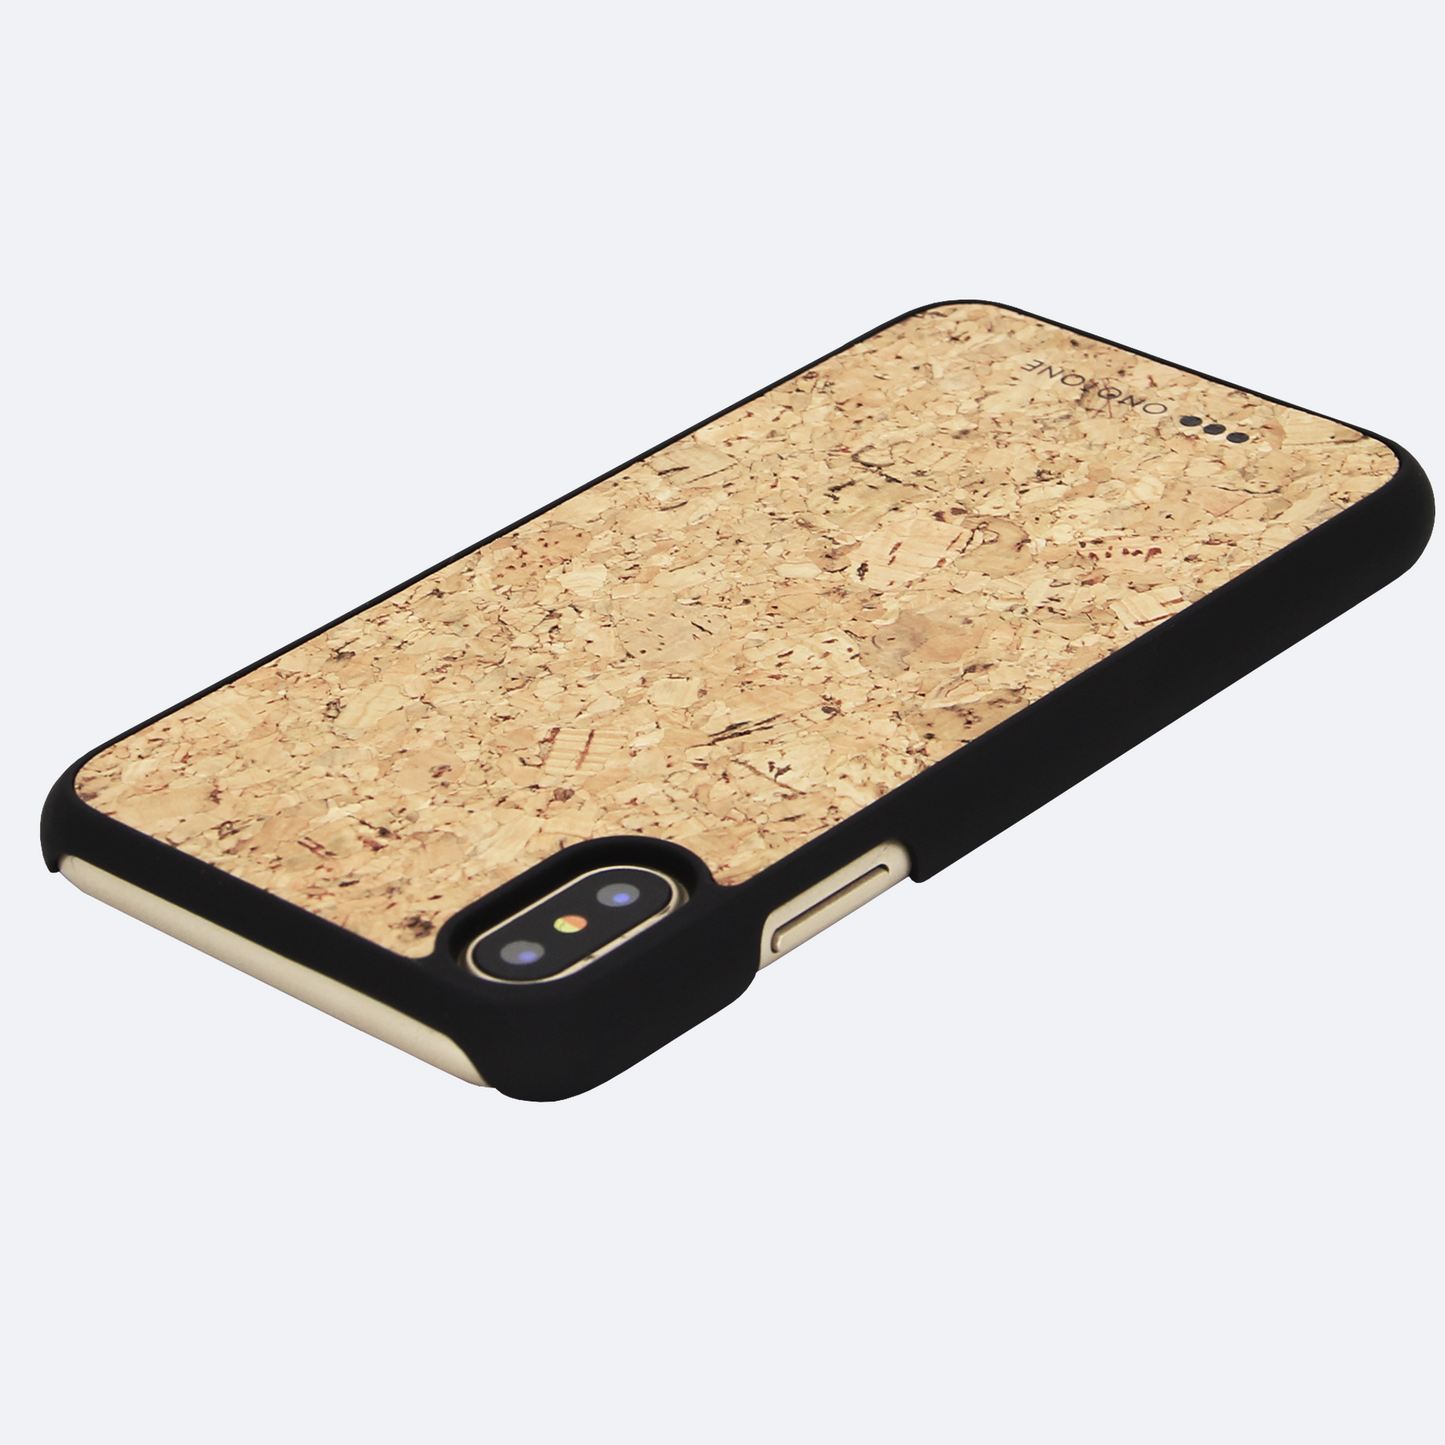 Cork iPhone cases